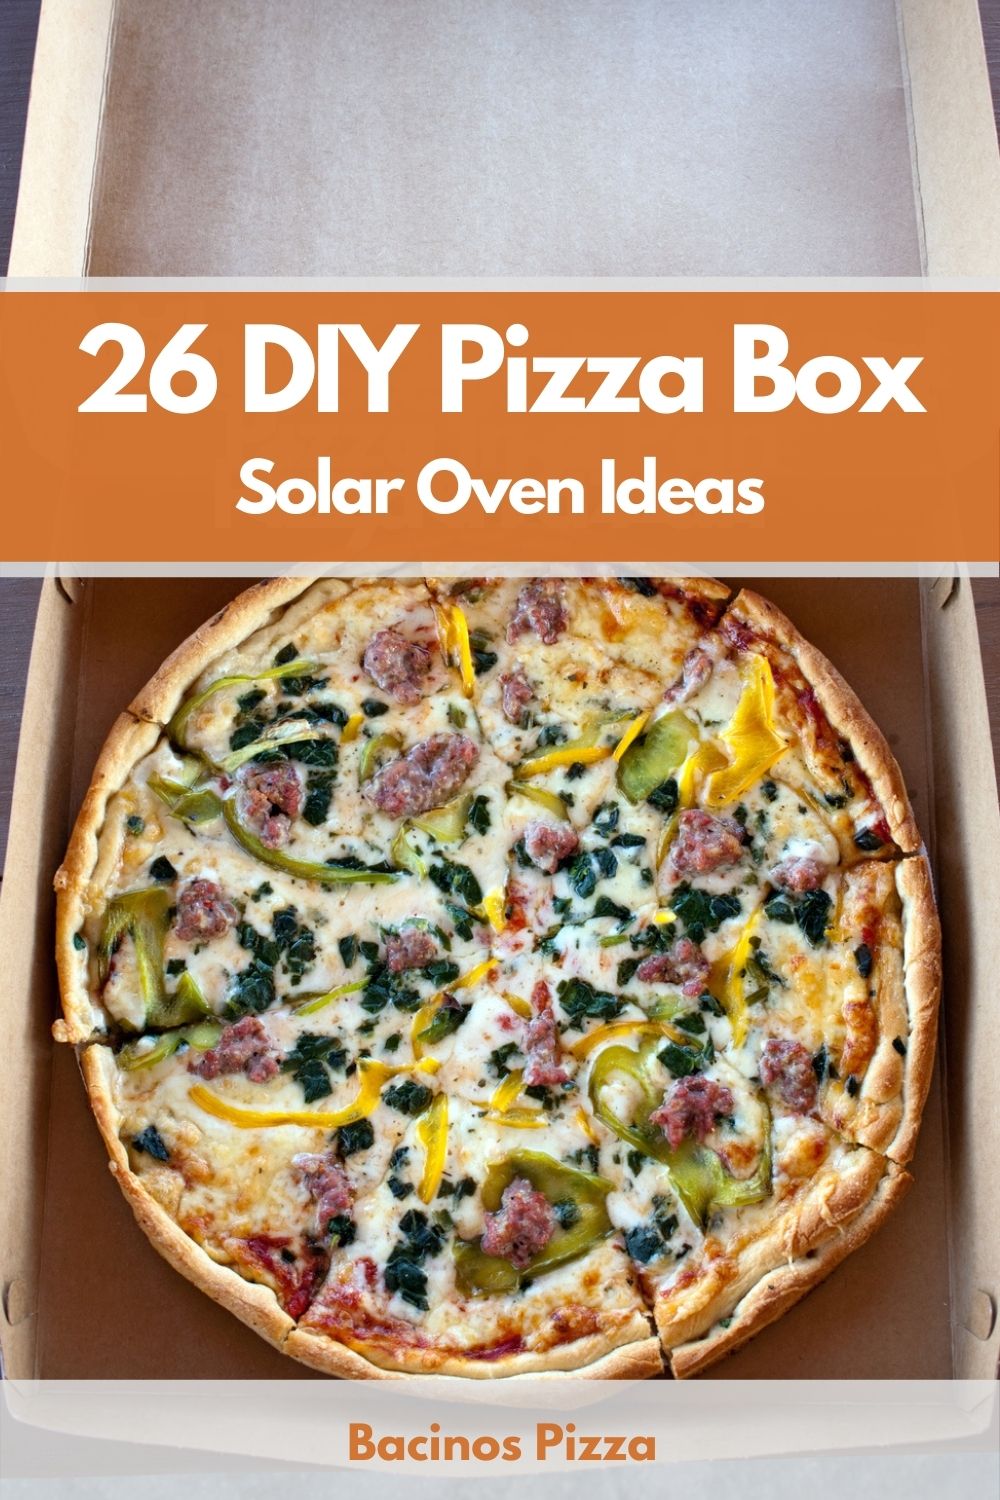 26 DIY Pizza Box Solar Oven Ideas pin